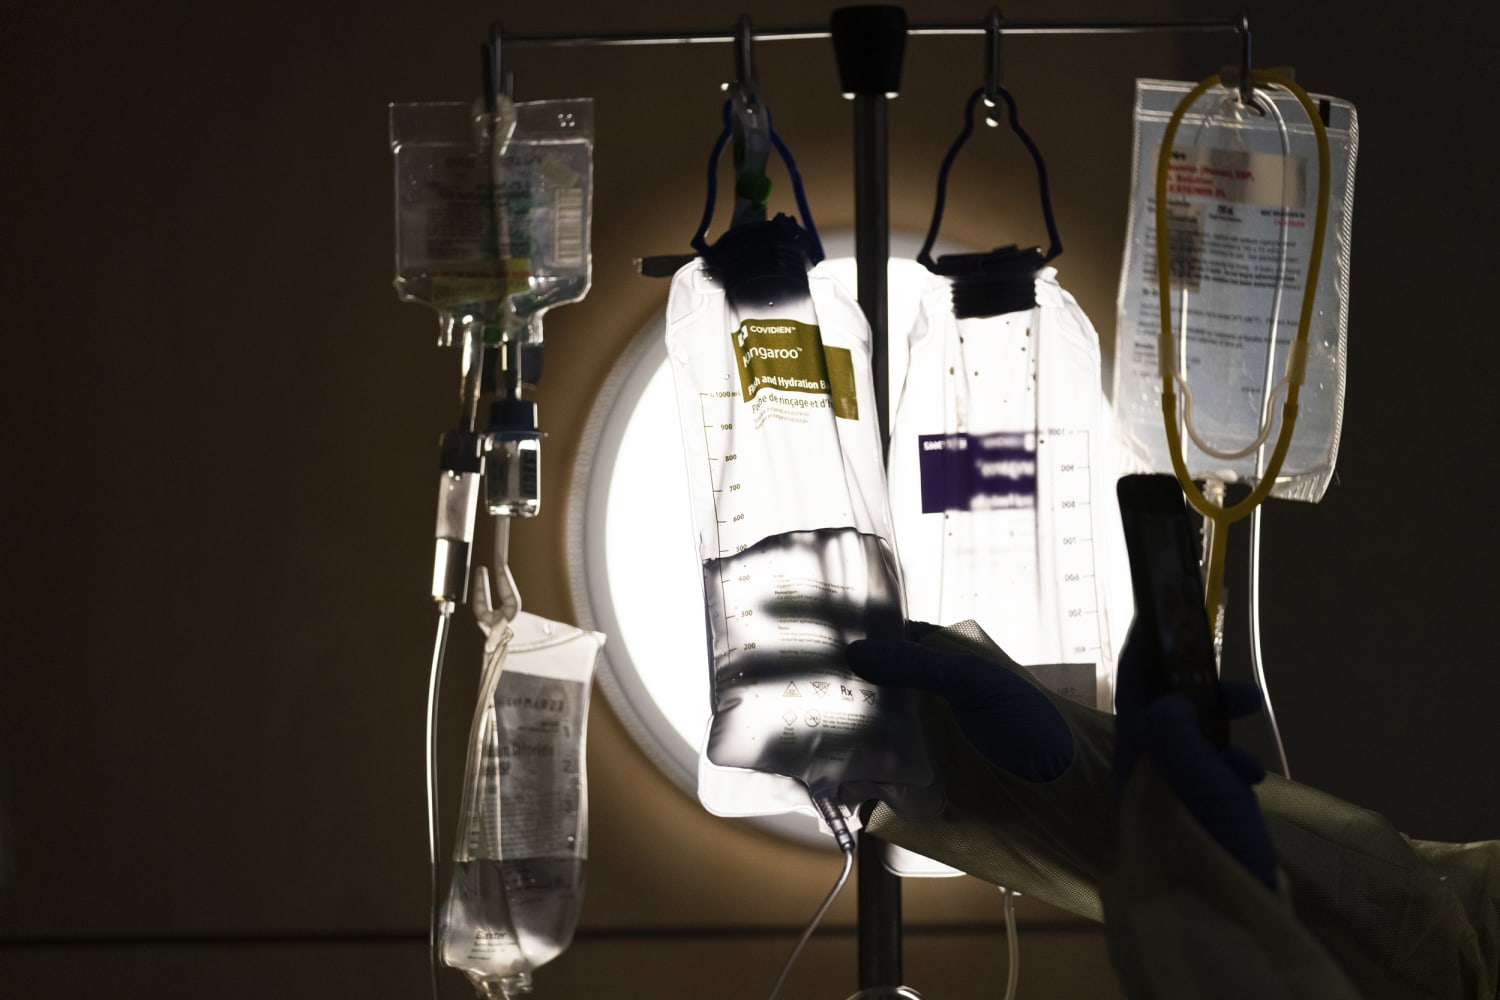 Beleaguered hospitals warn patients, push back treatments amid Covid surge